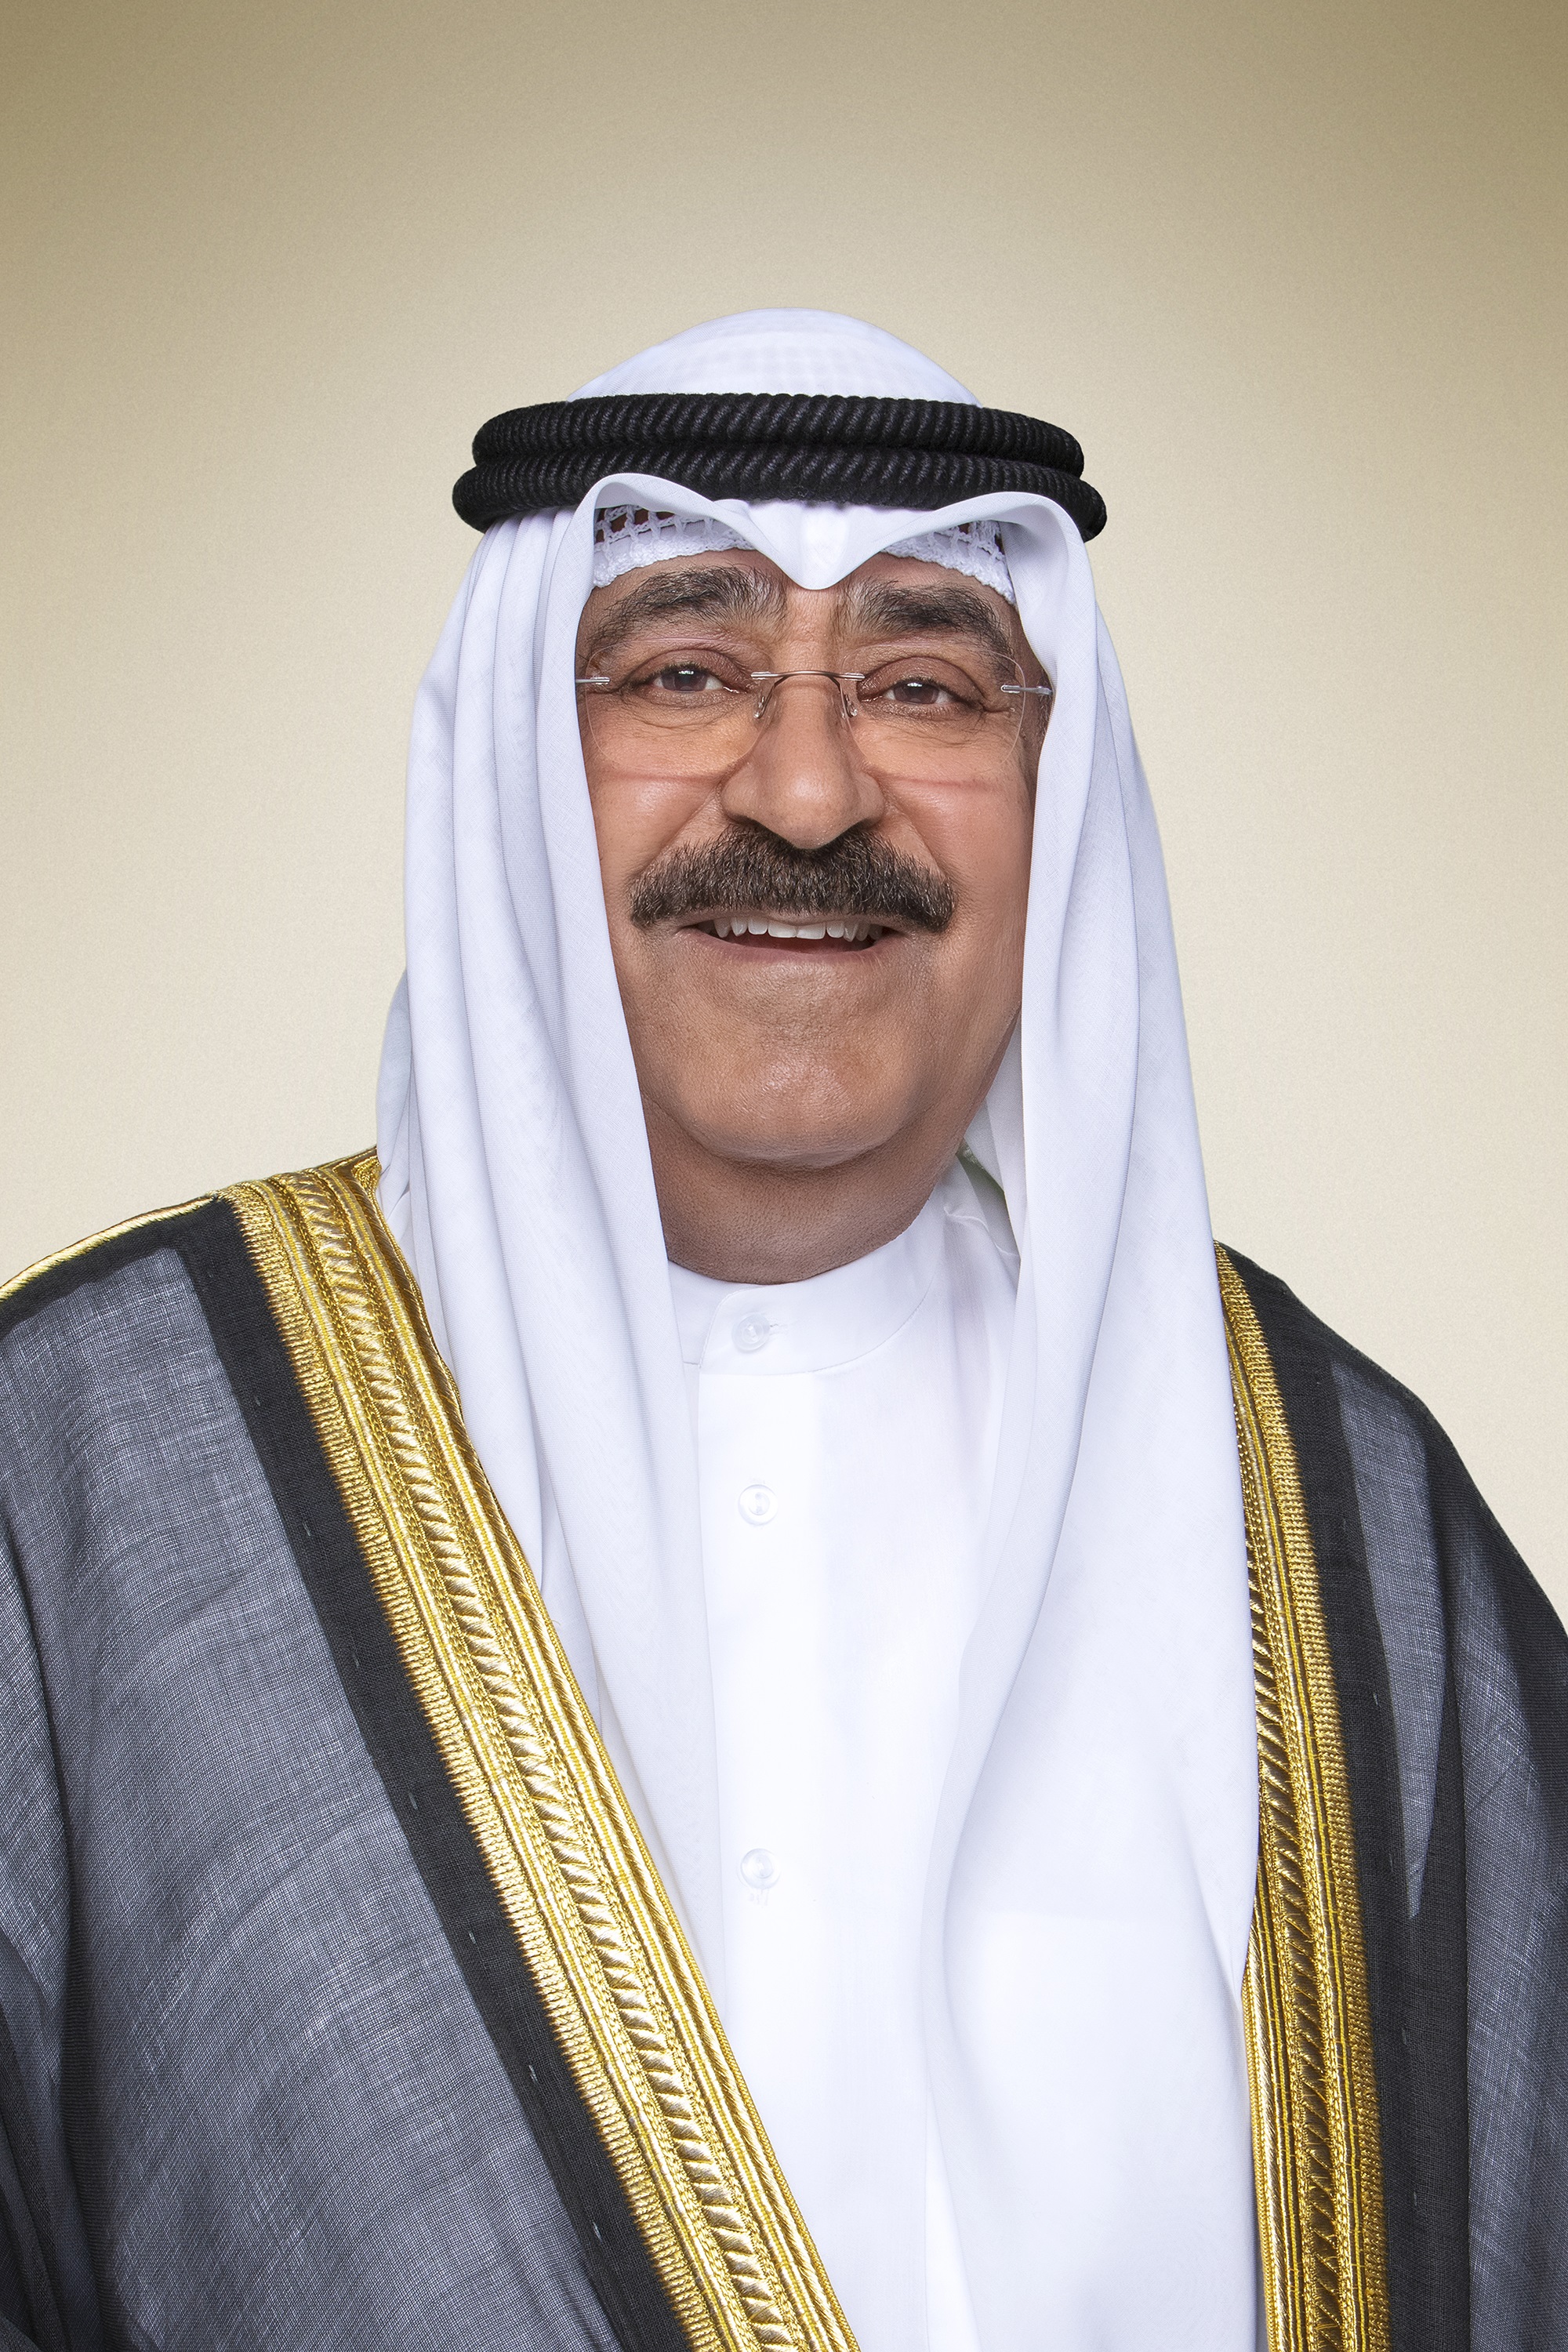 His Highness the Crown Prince of Kuwait Sheikh Mishal Al-Ahmad Al-Jaber Al-Sabah